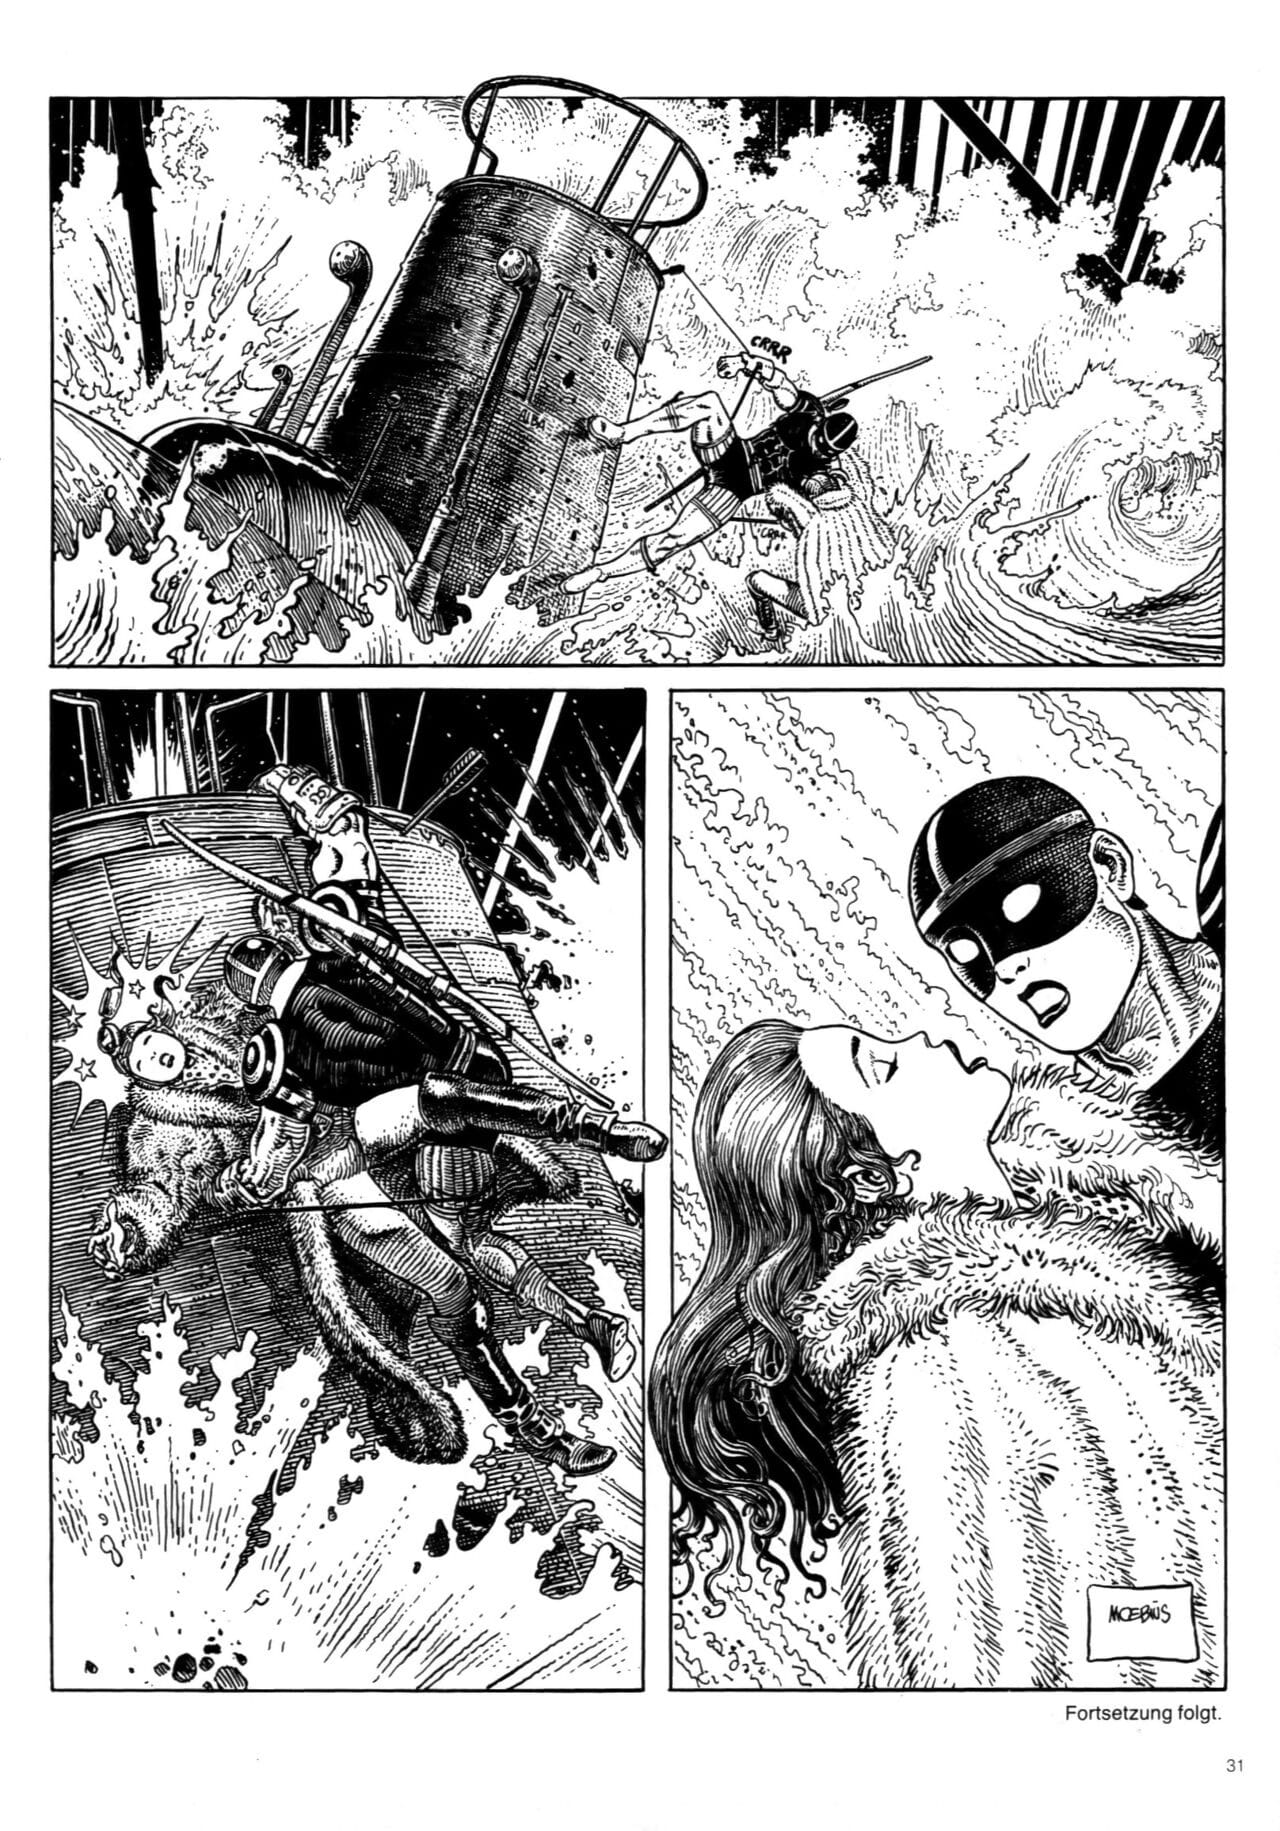 schwermetall #030 部分 2 page 1